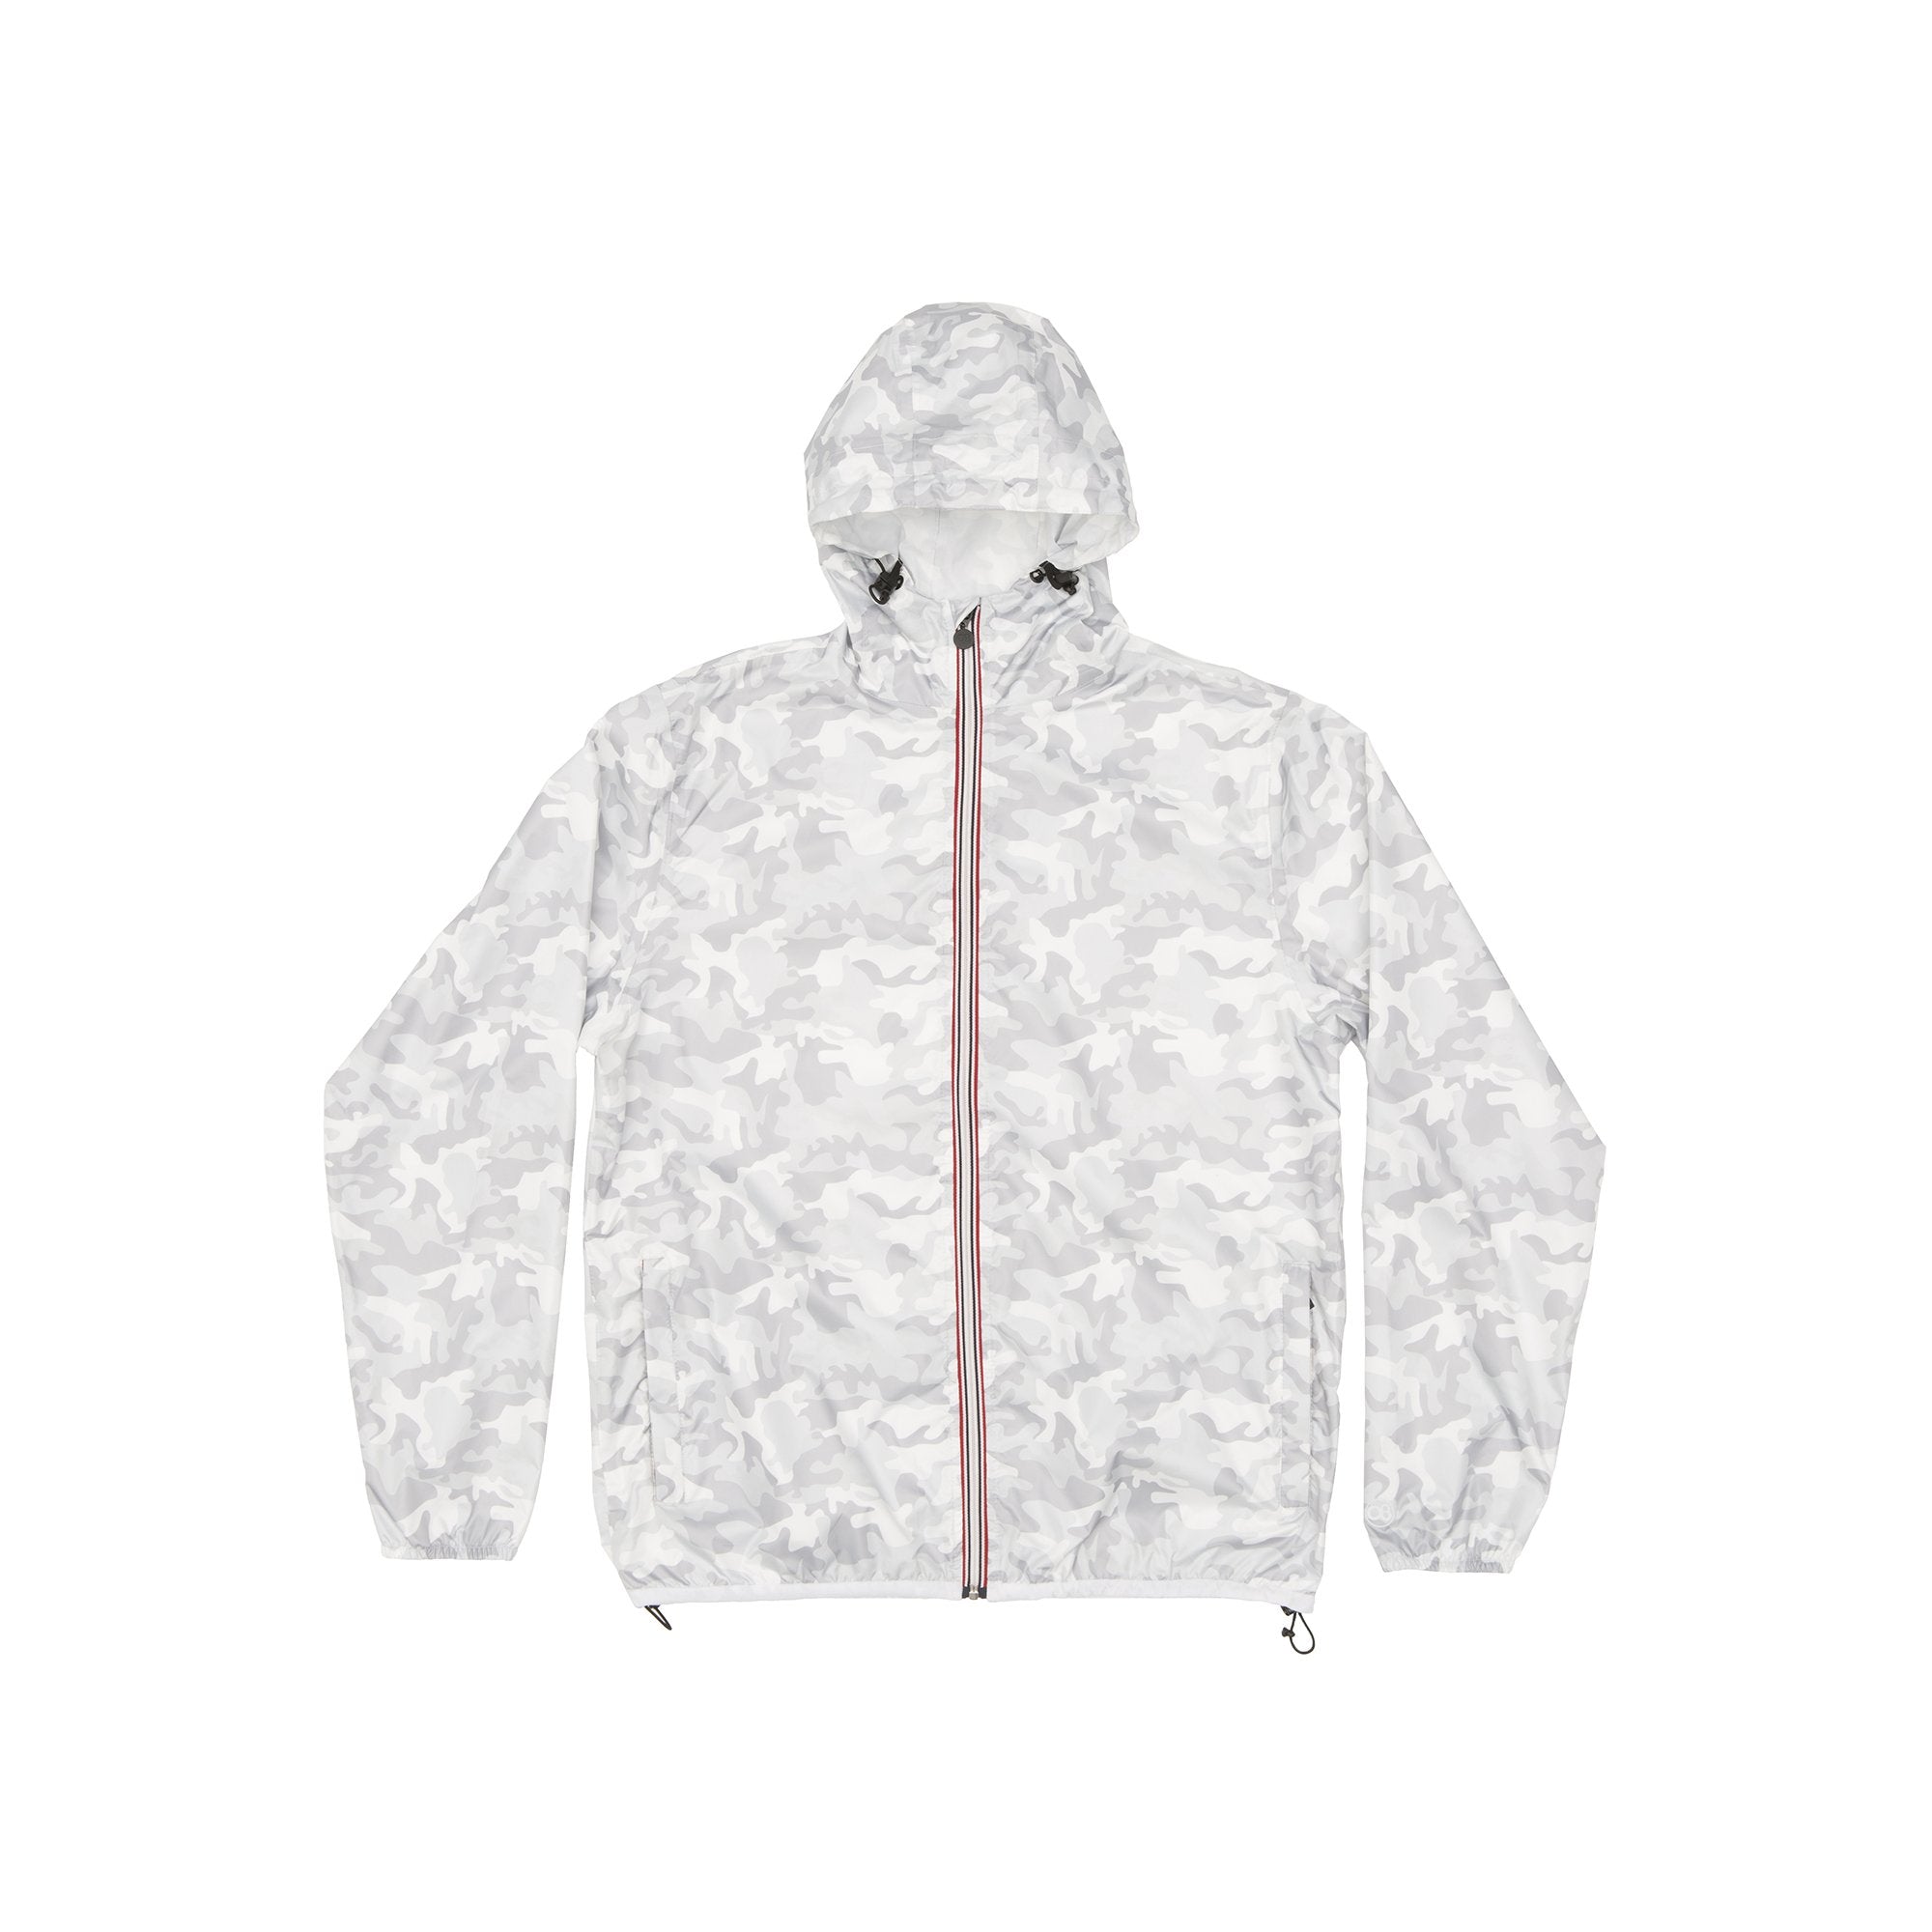 Max Print - White Camo Full Zip Packable Rain Jacket - O8lifestyle.